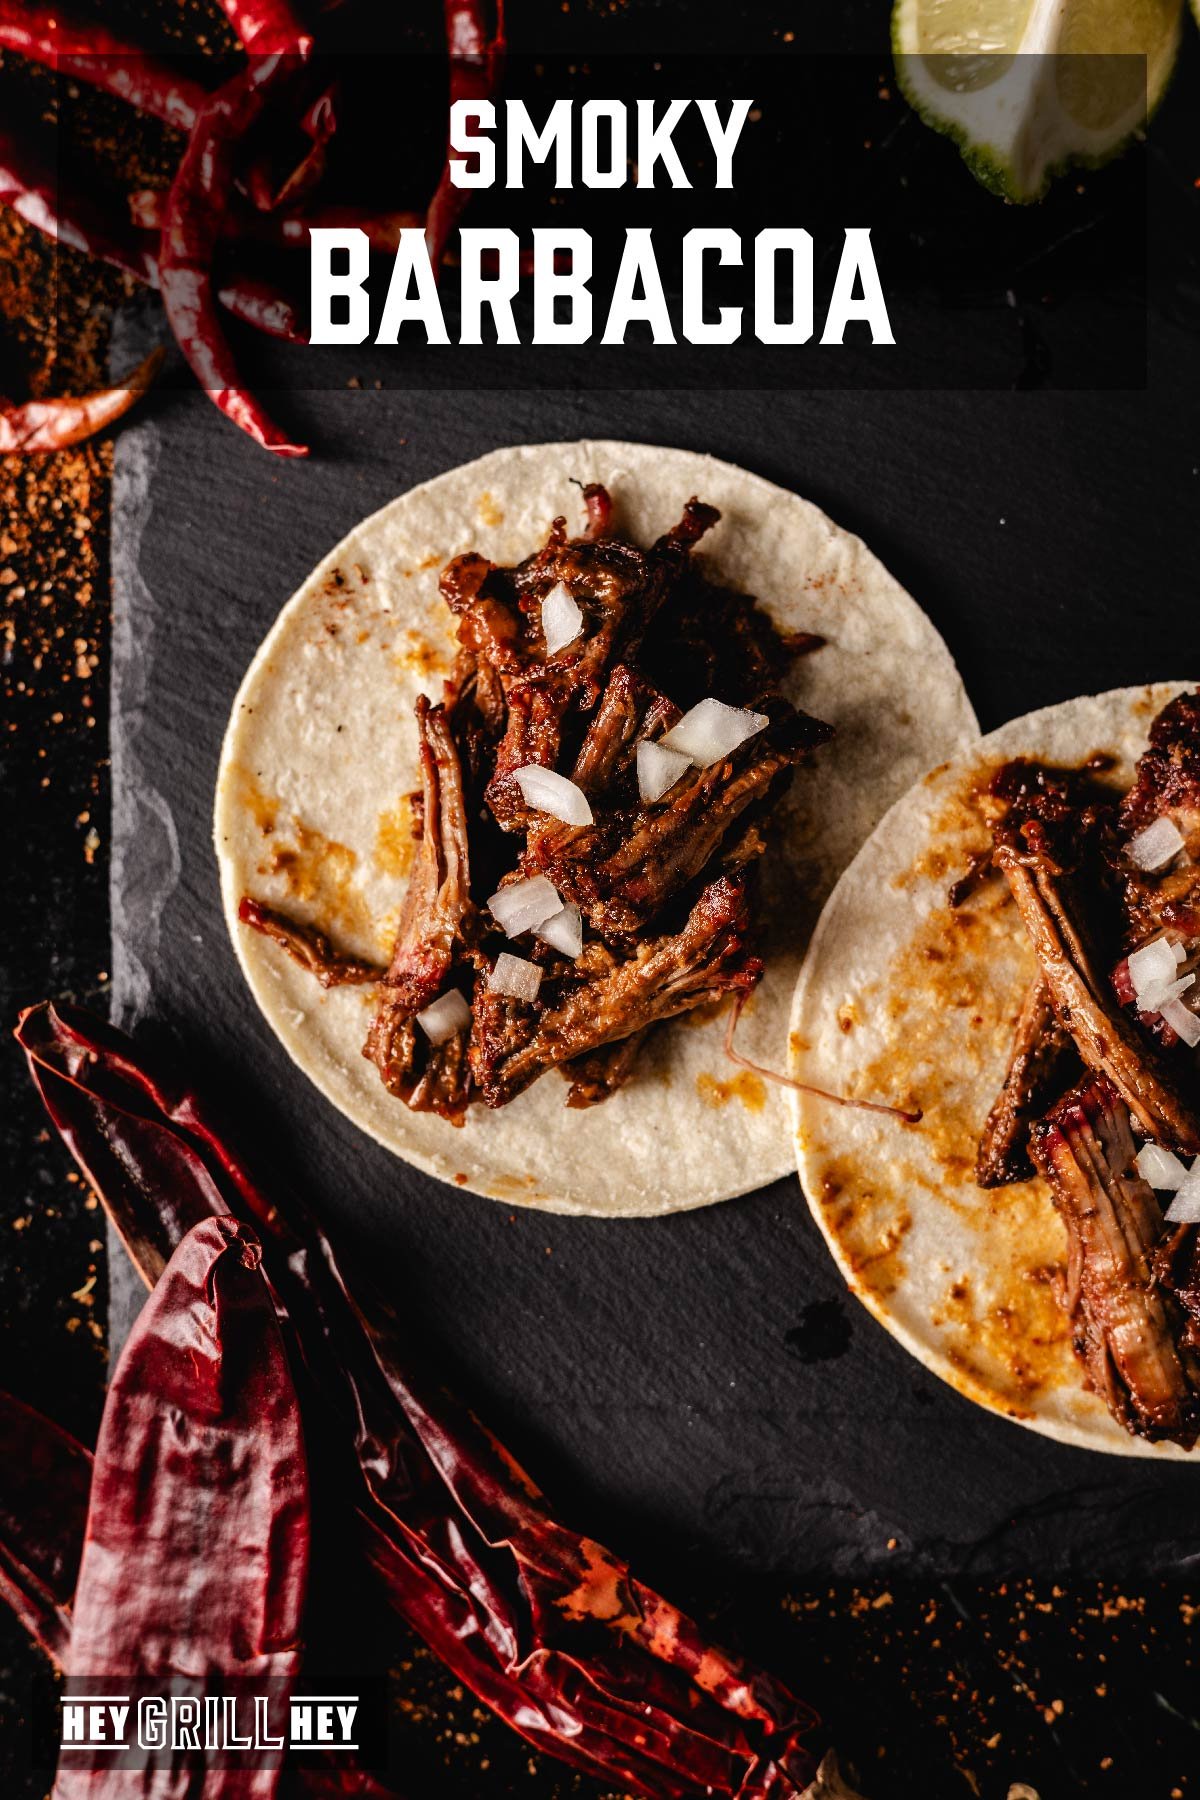 Barbacoa tacos on black serving platter. Text reads "Smoky Barbacoa".